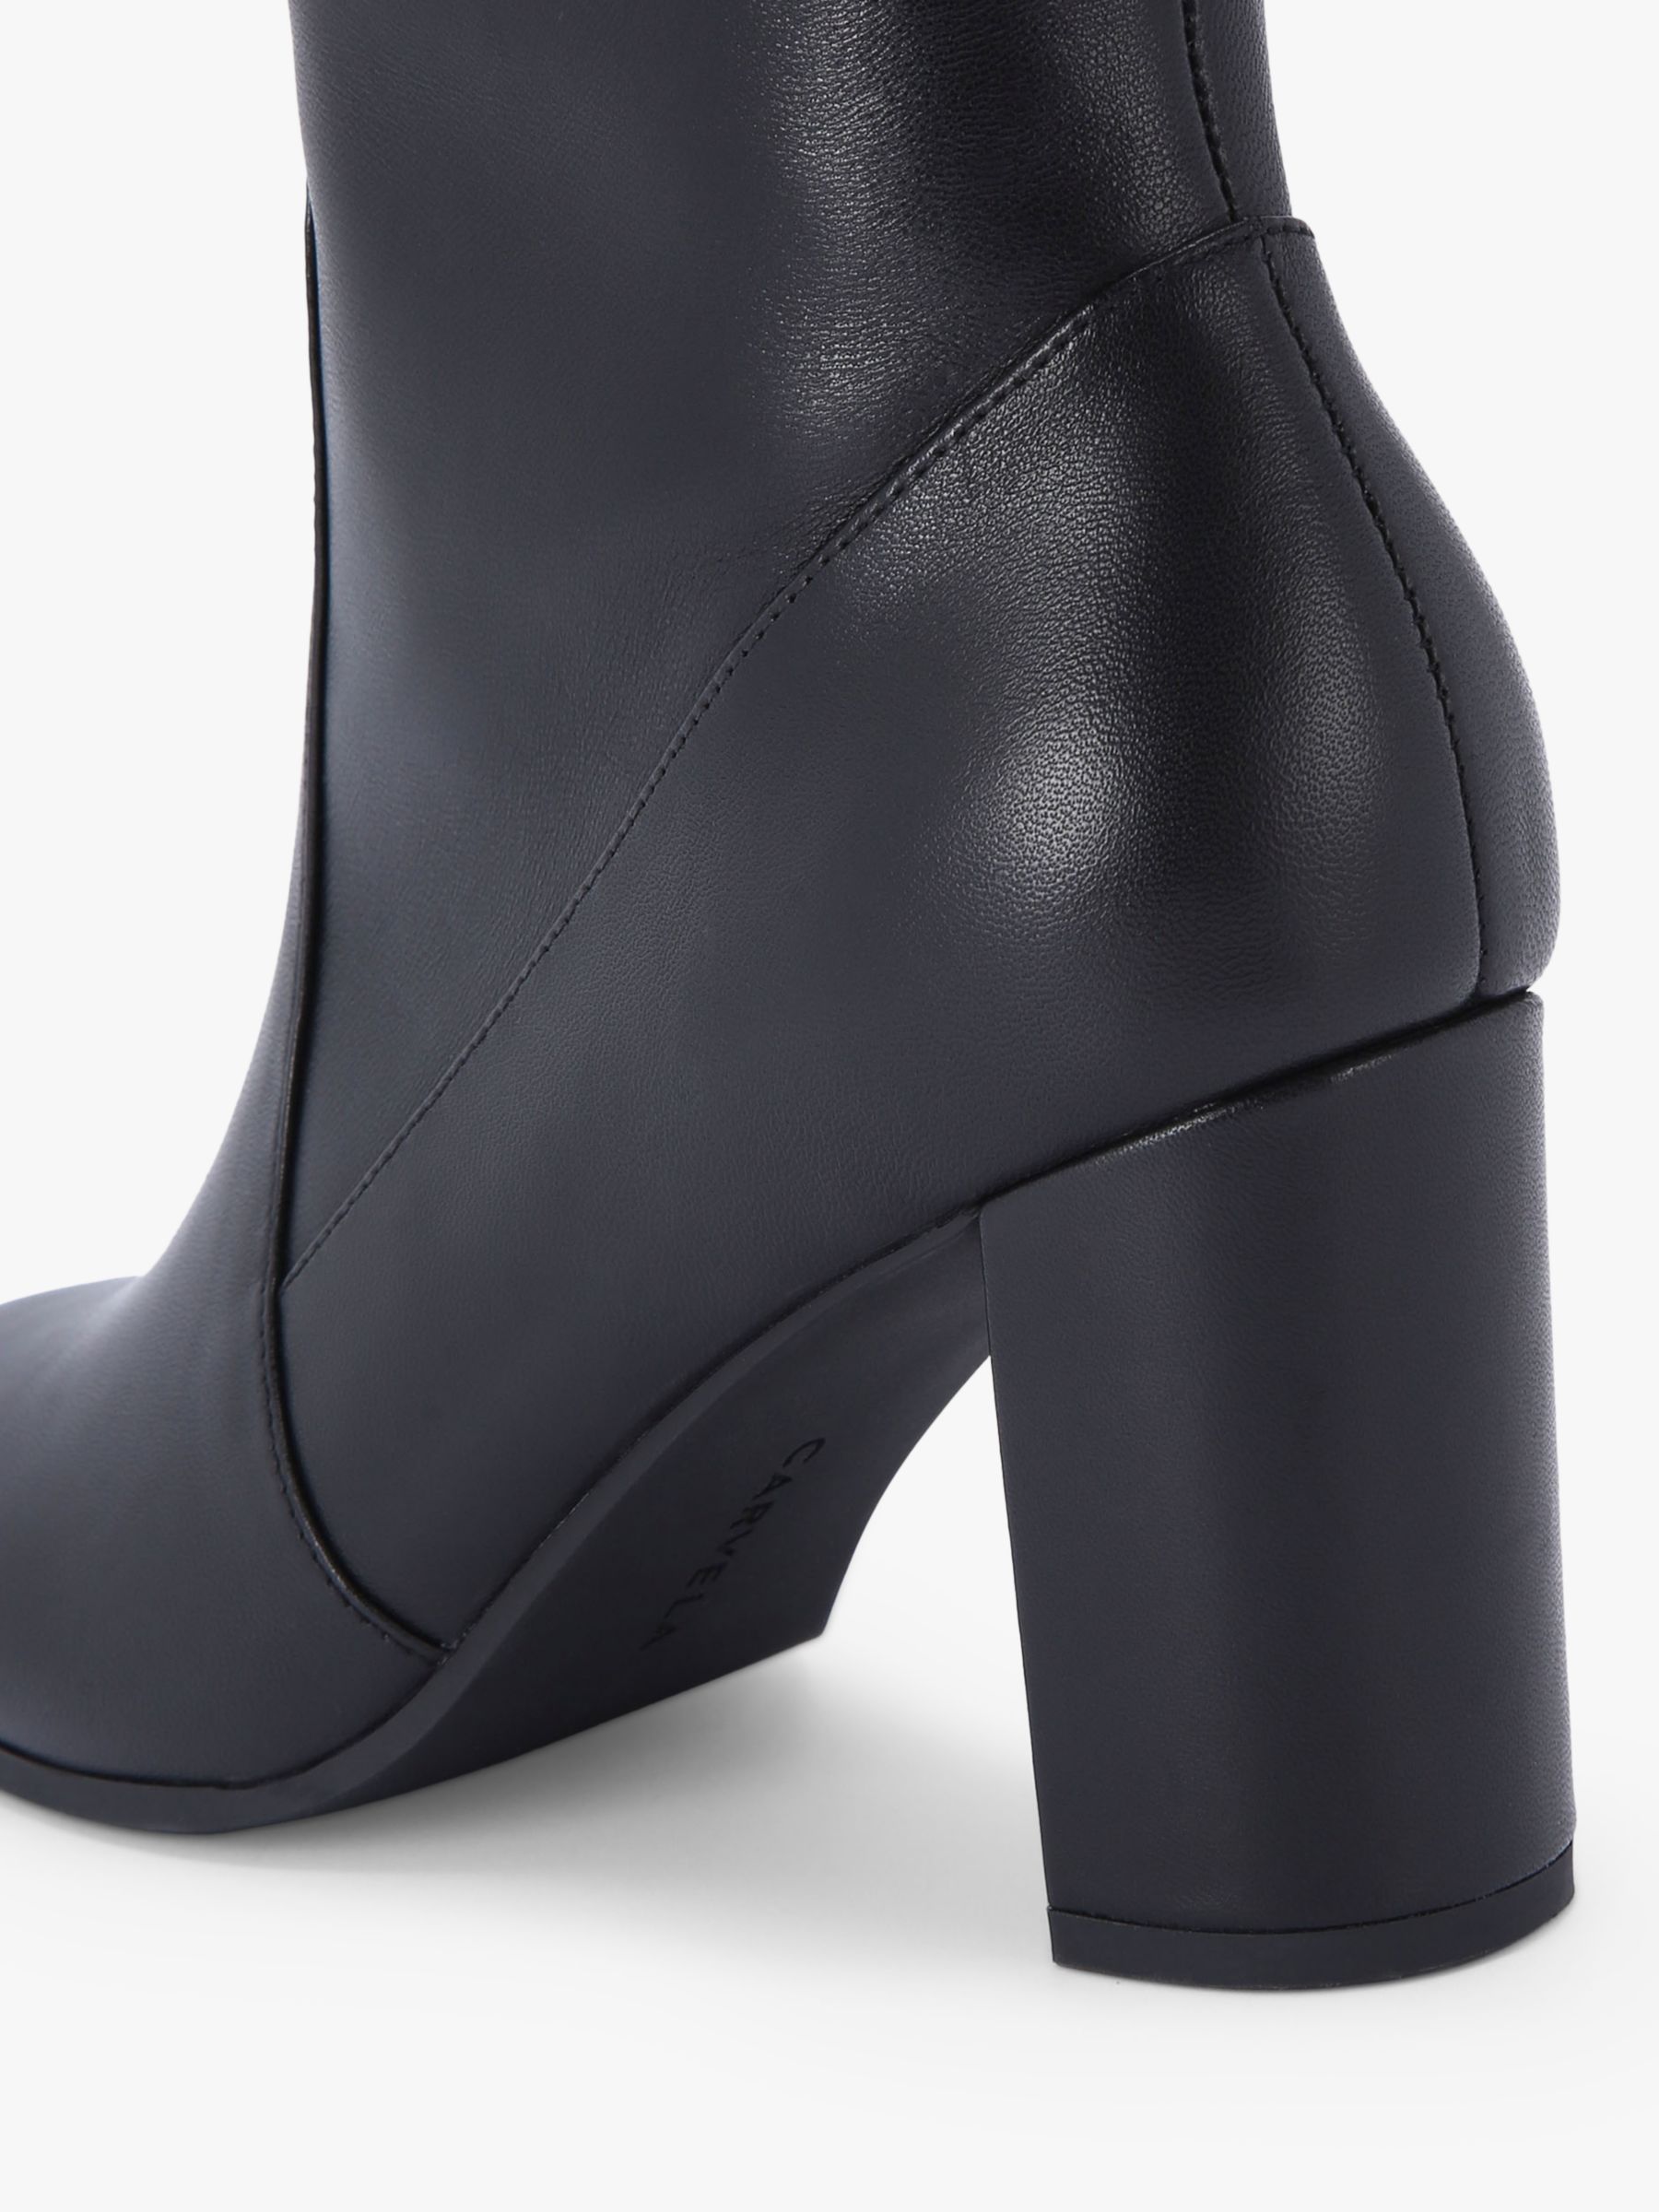 Carvela Pose Leather Knee High Boots, Black, 6